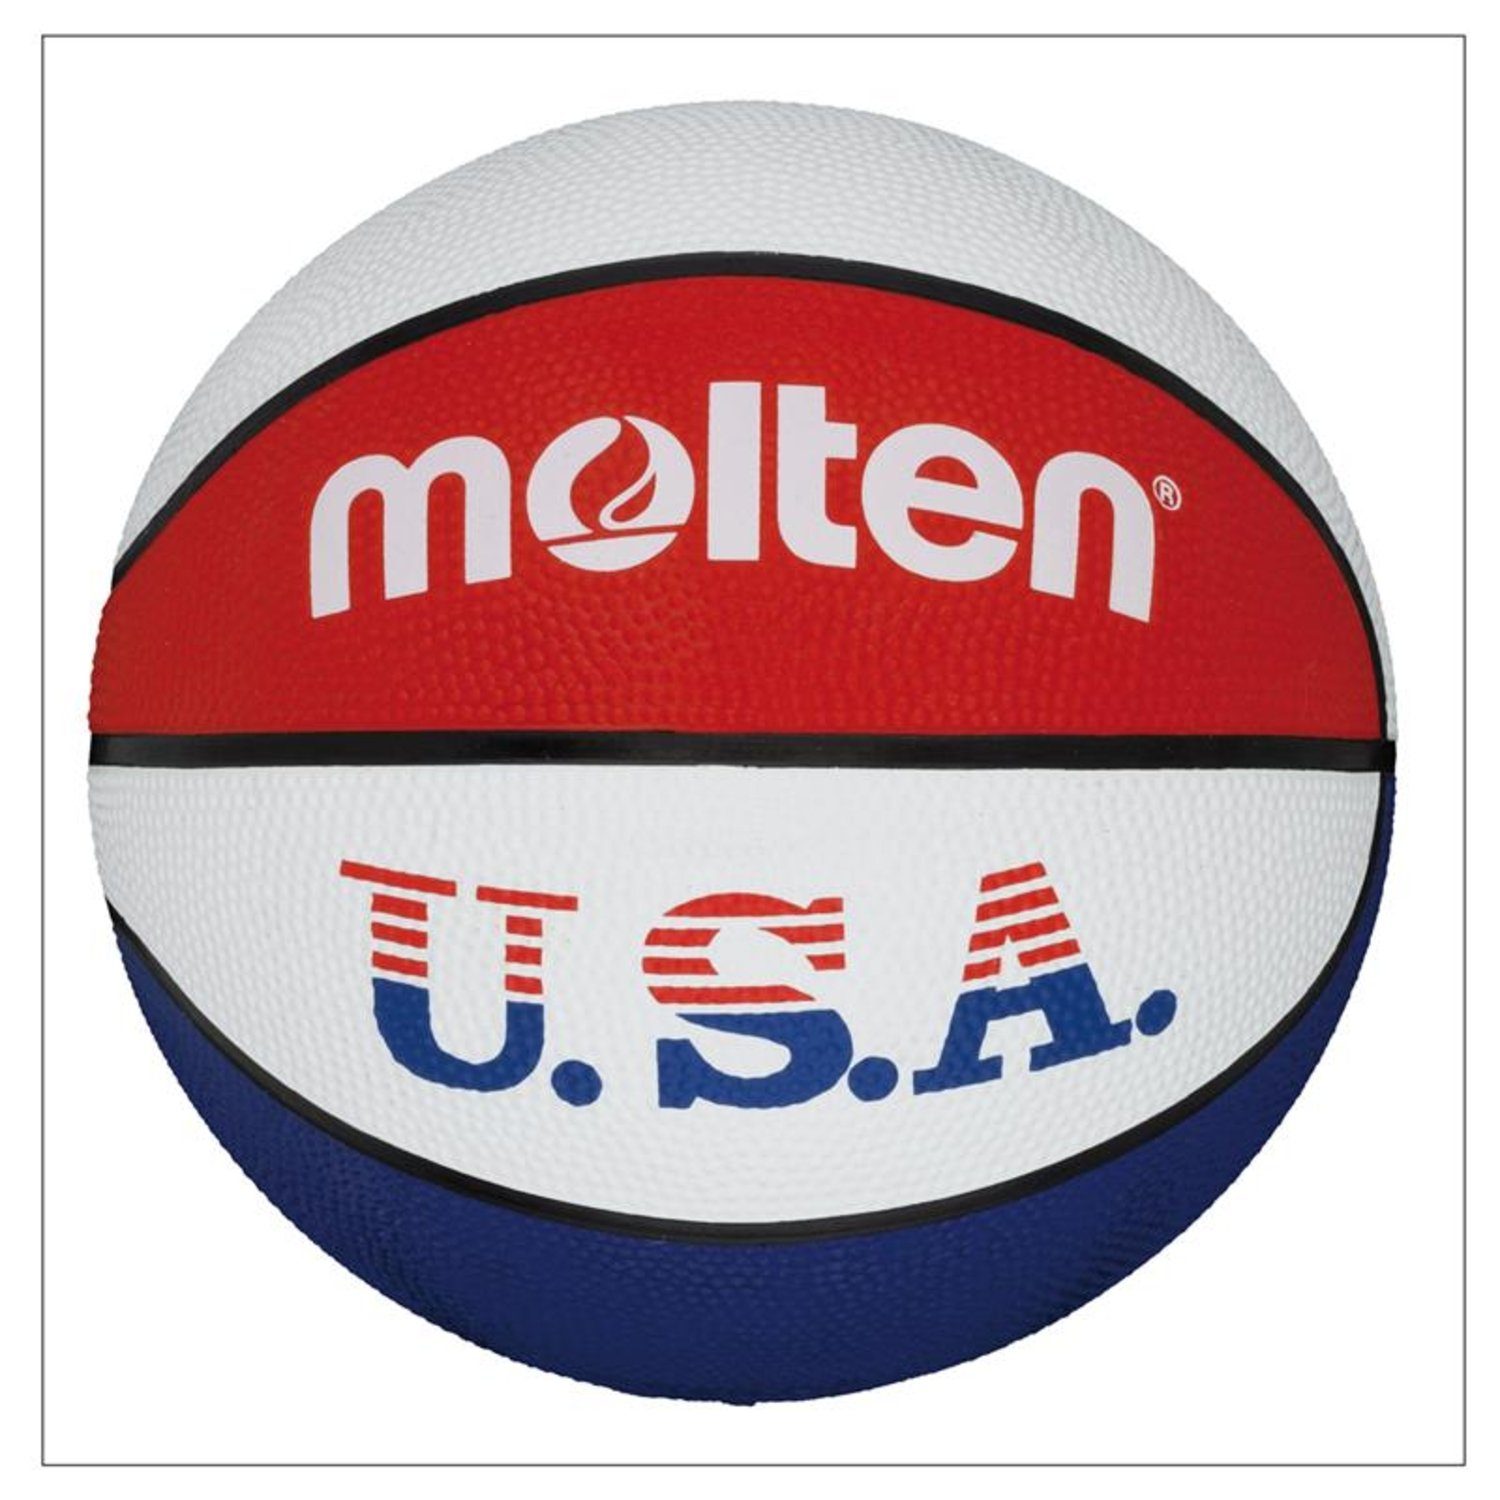 7 USA, Basketballkorb Trainingsball Molten BC7R-USA Gr.